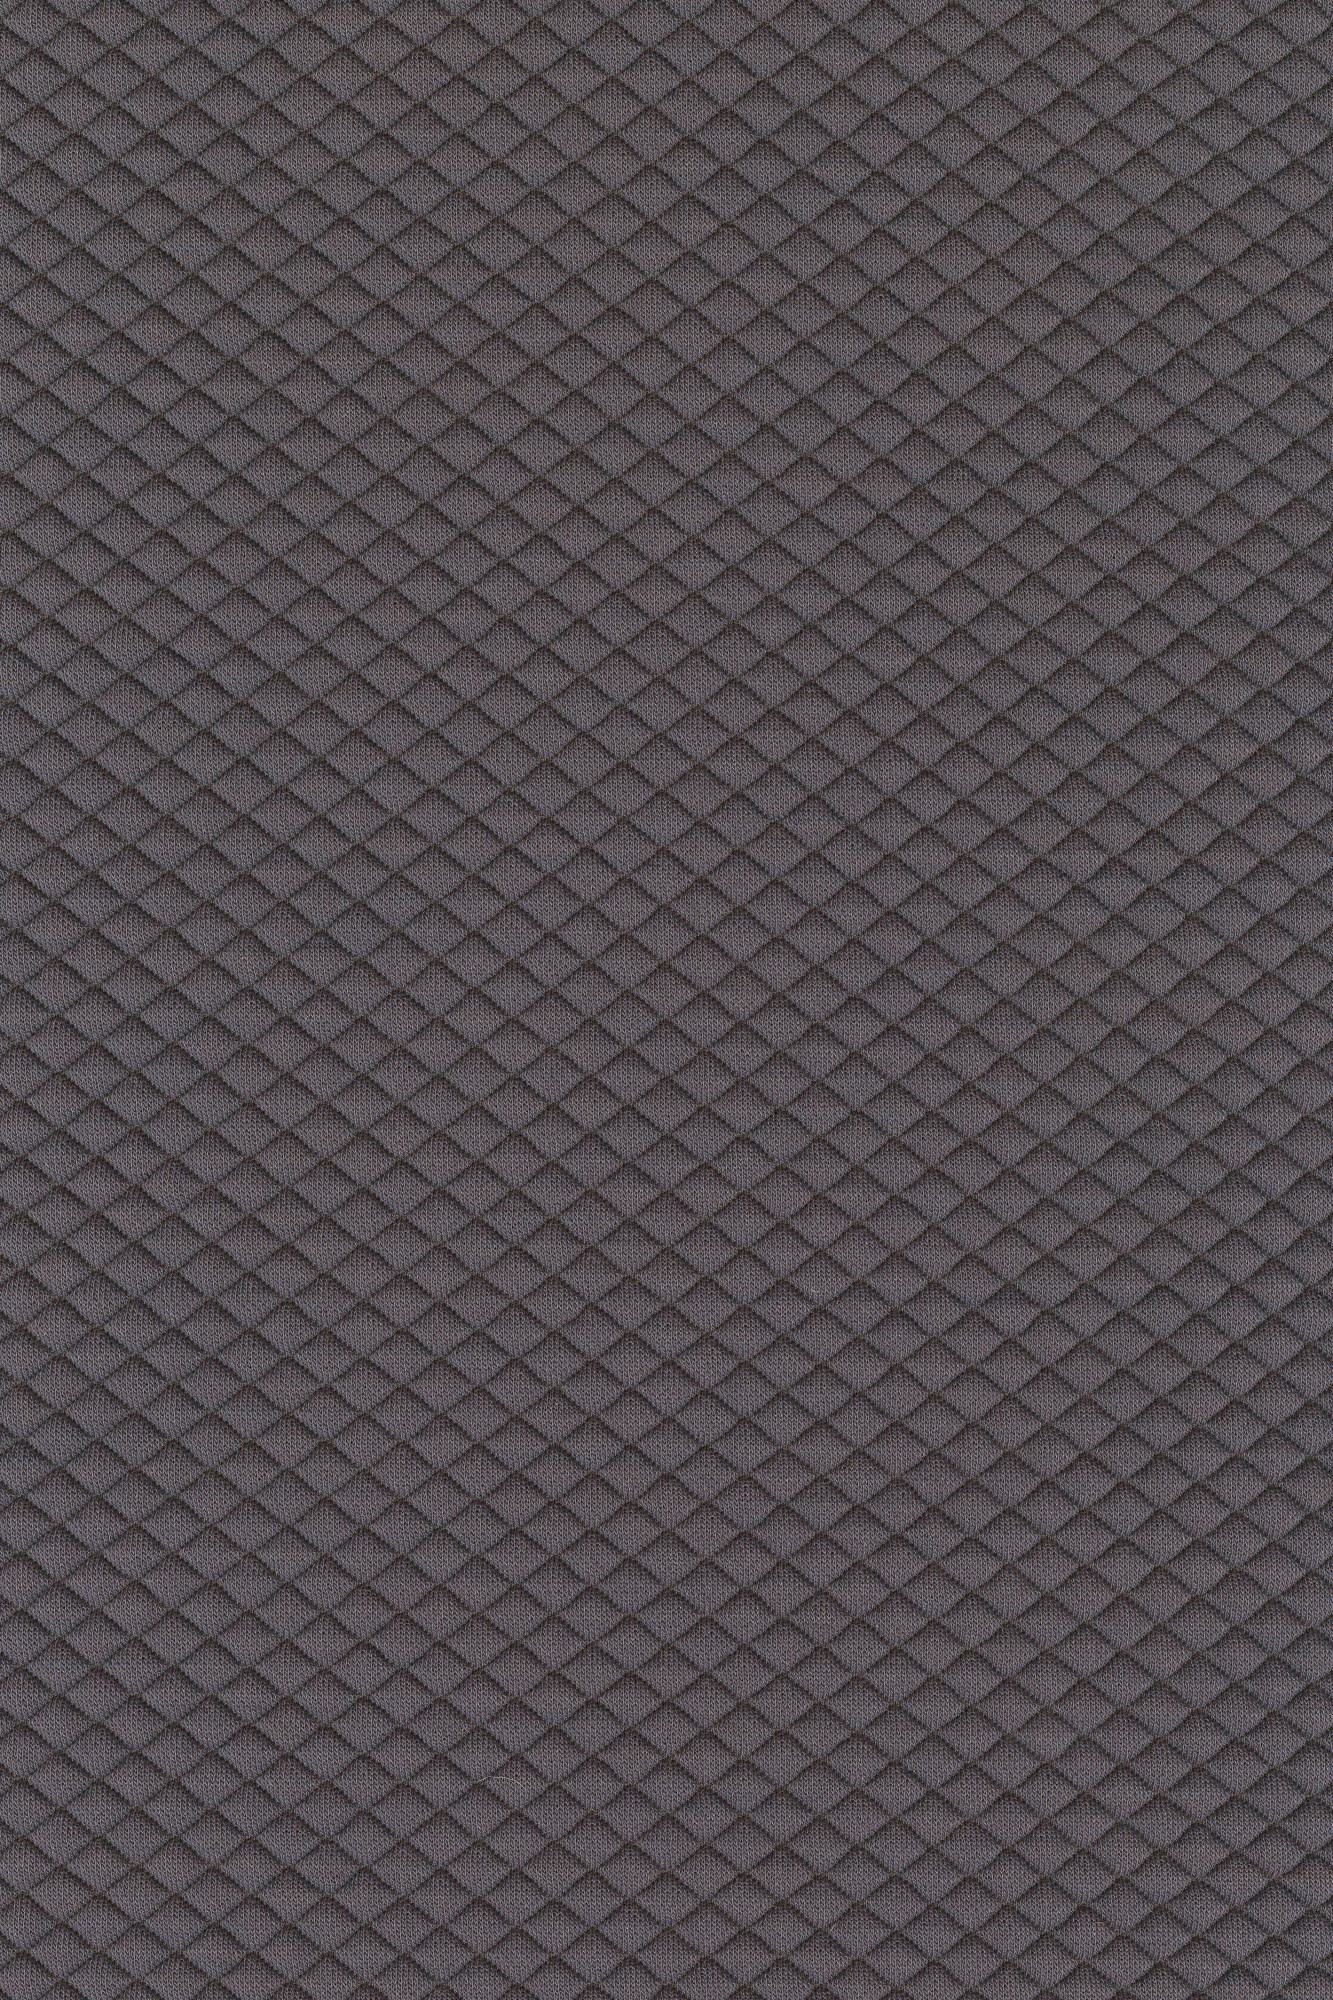 Fabric sample Mosaic 2 0642 purple